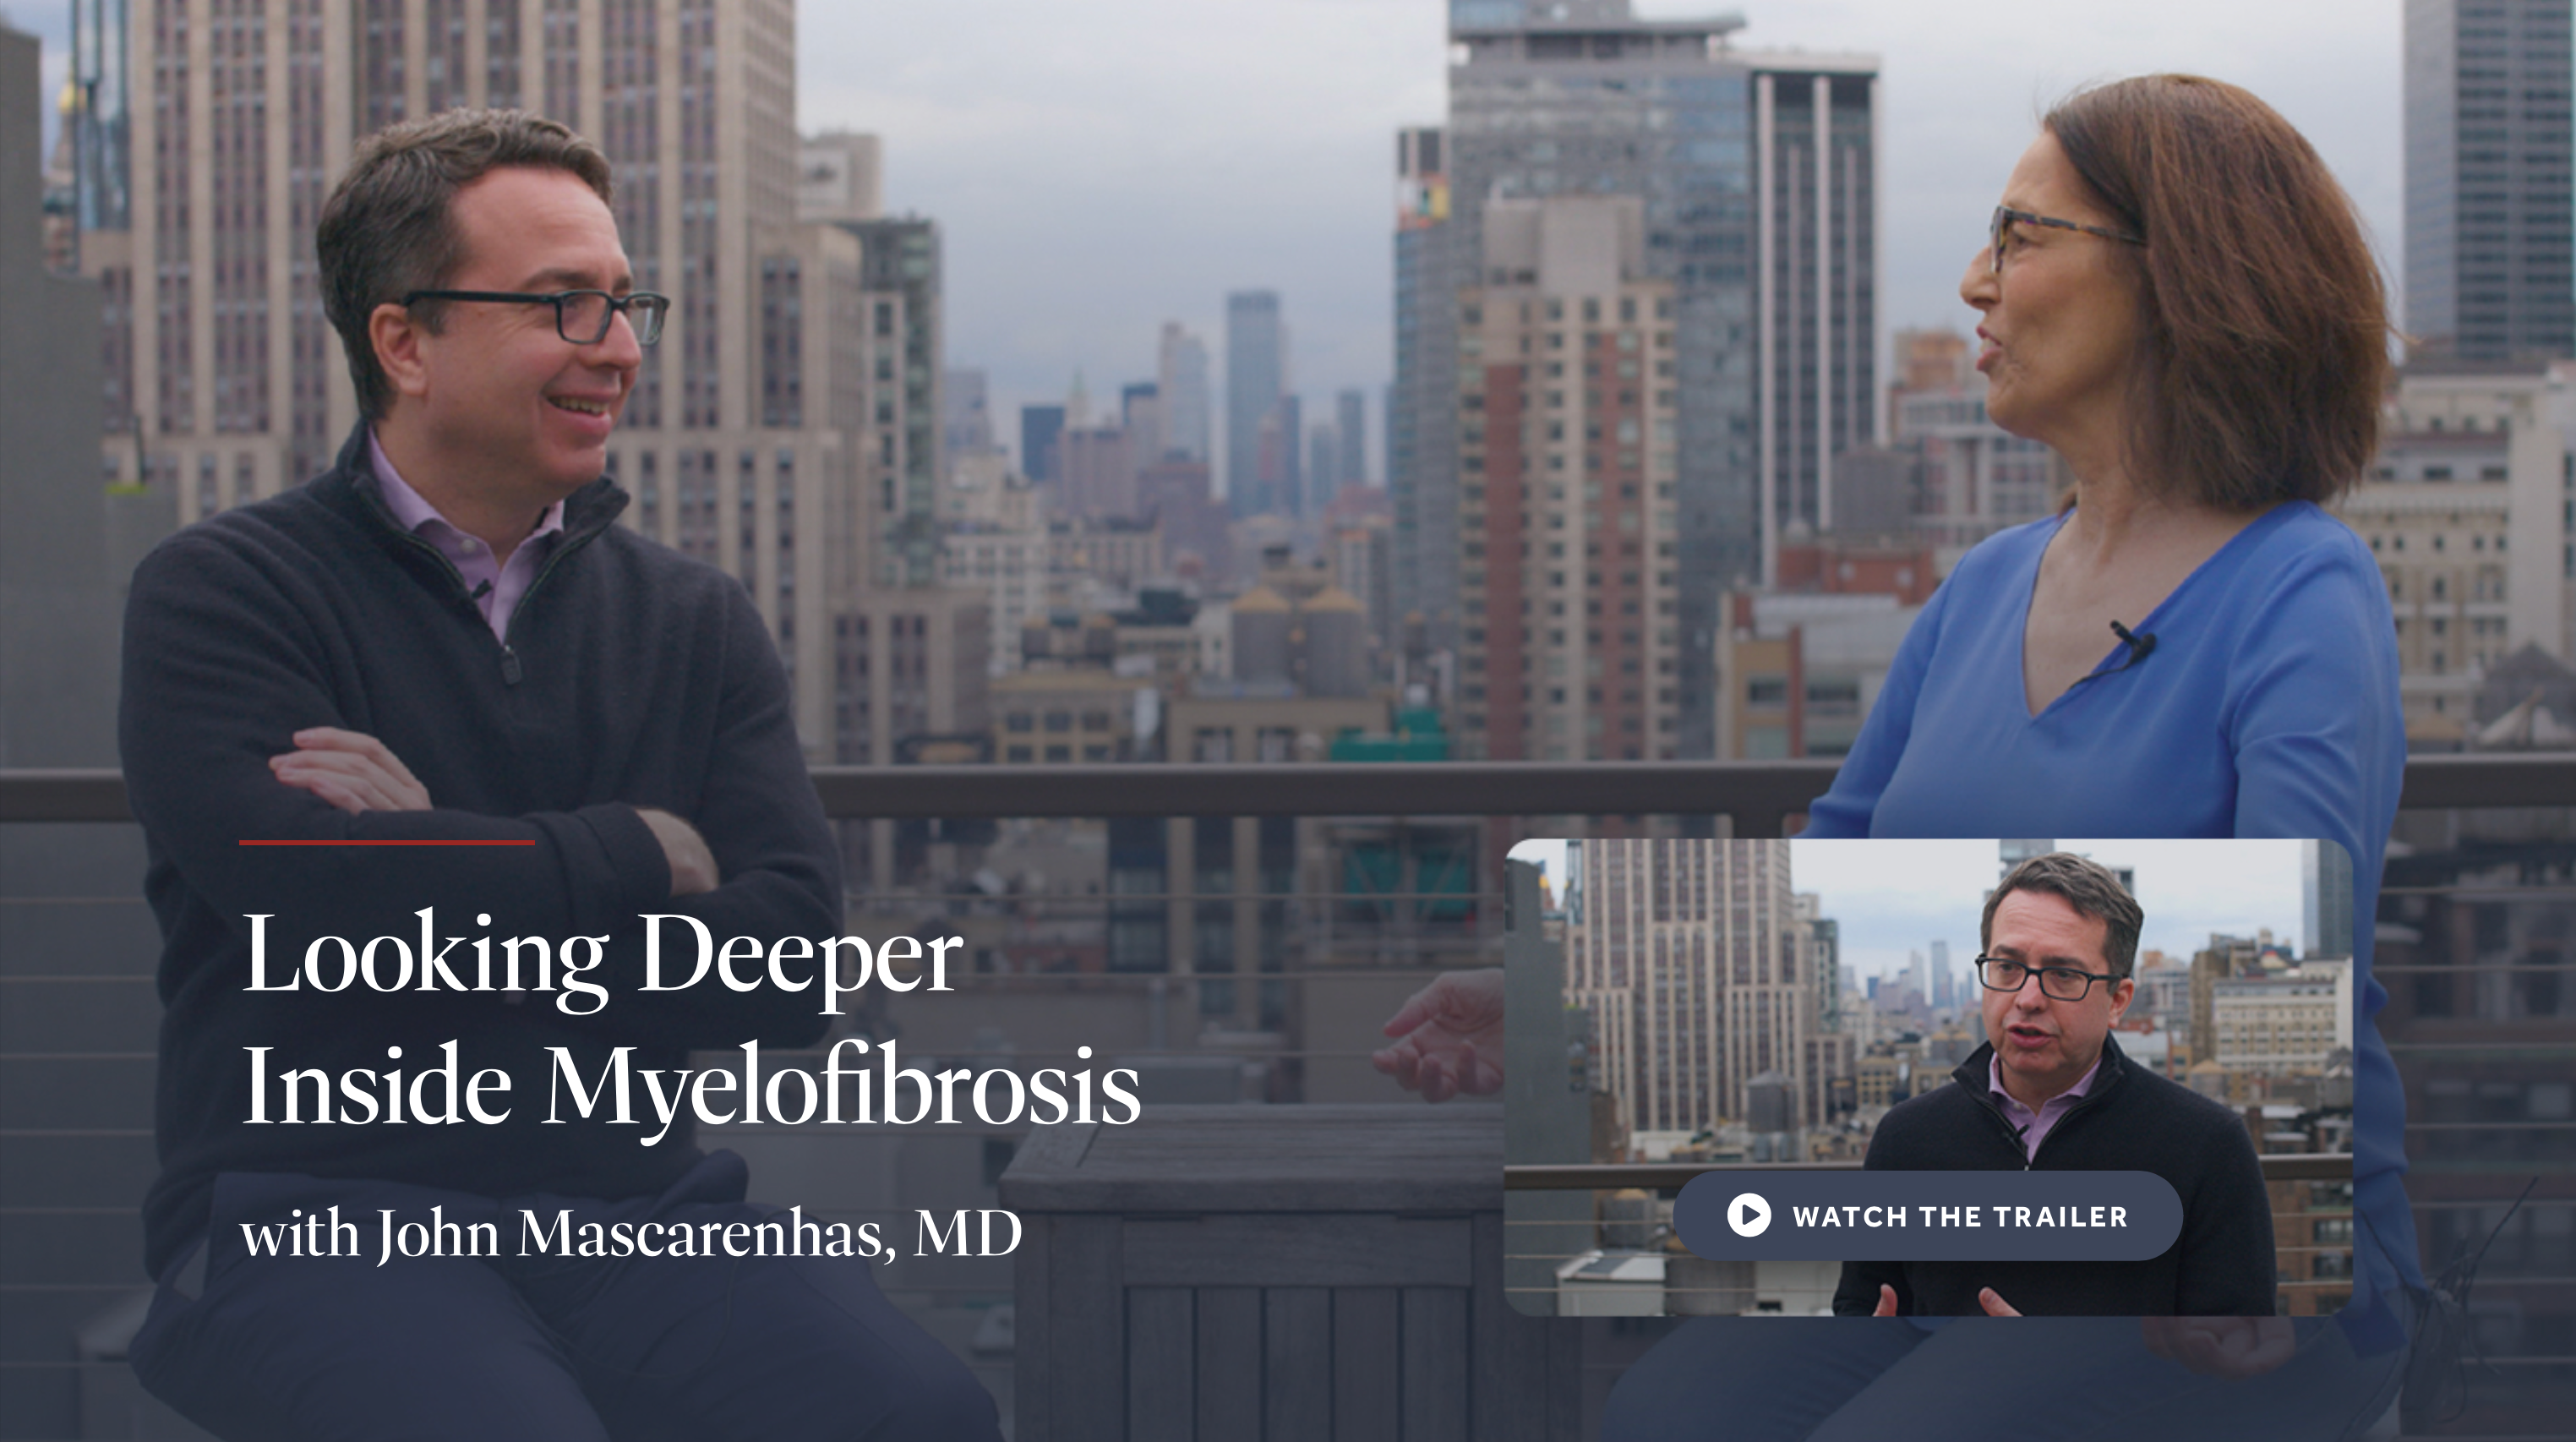 Looking Deeper Inside Myelofibrosis